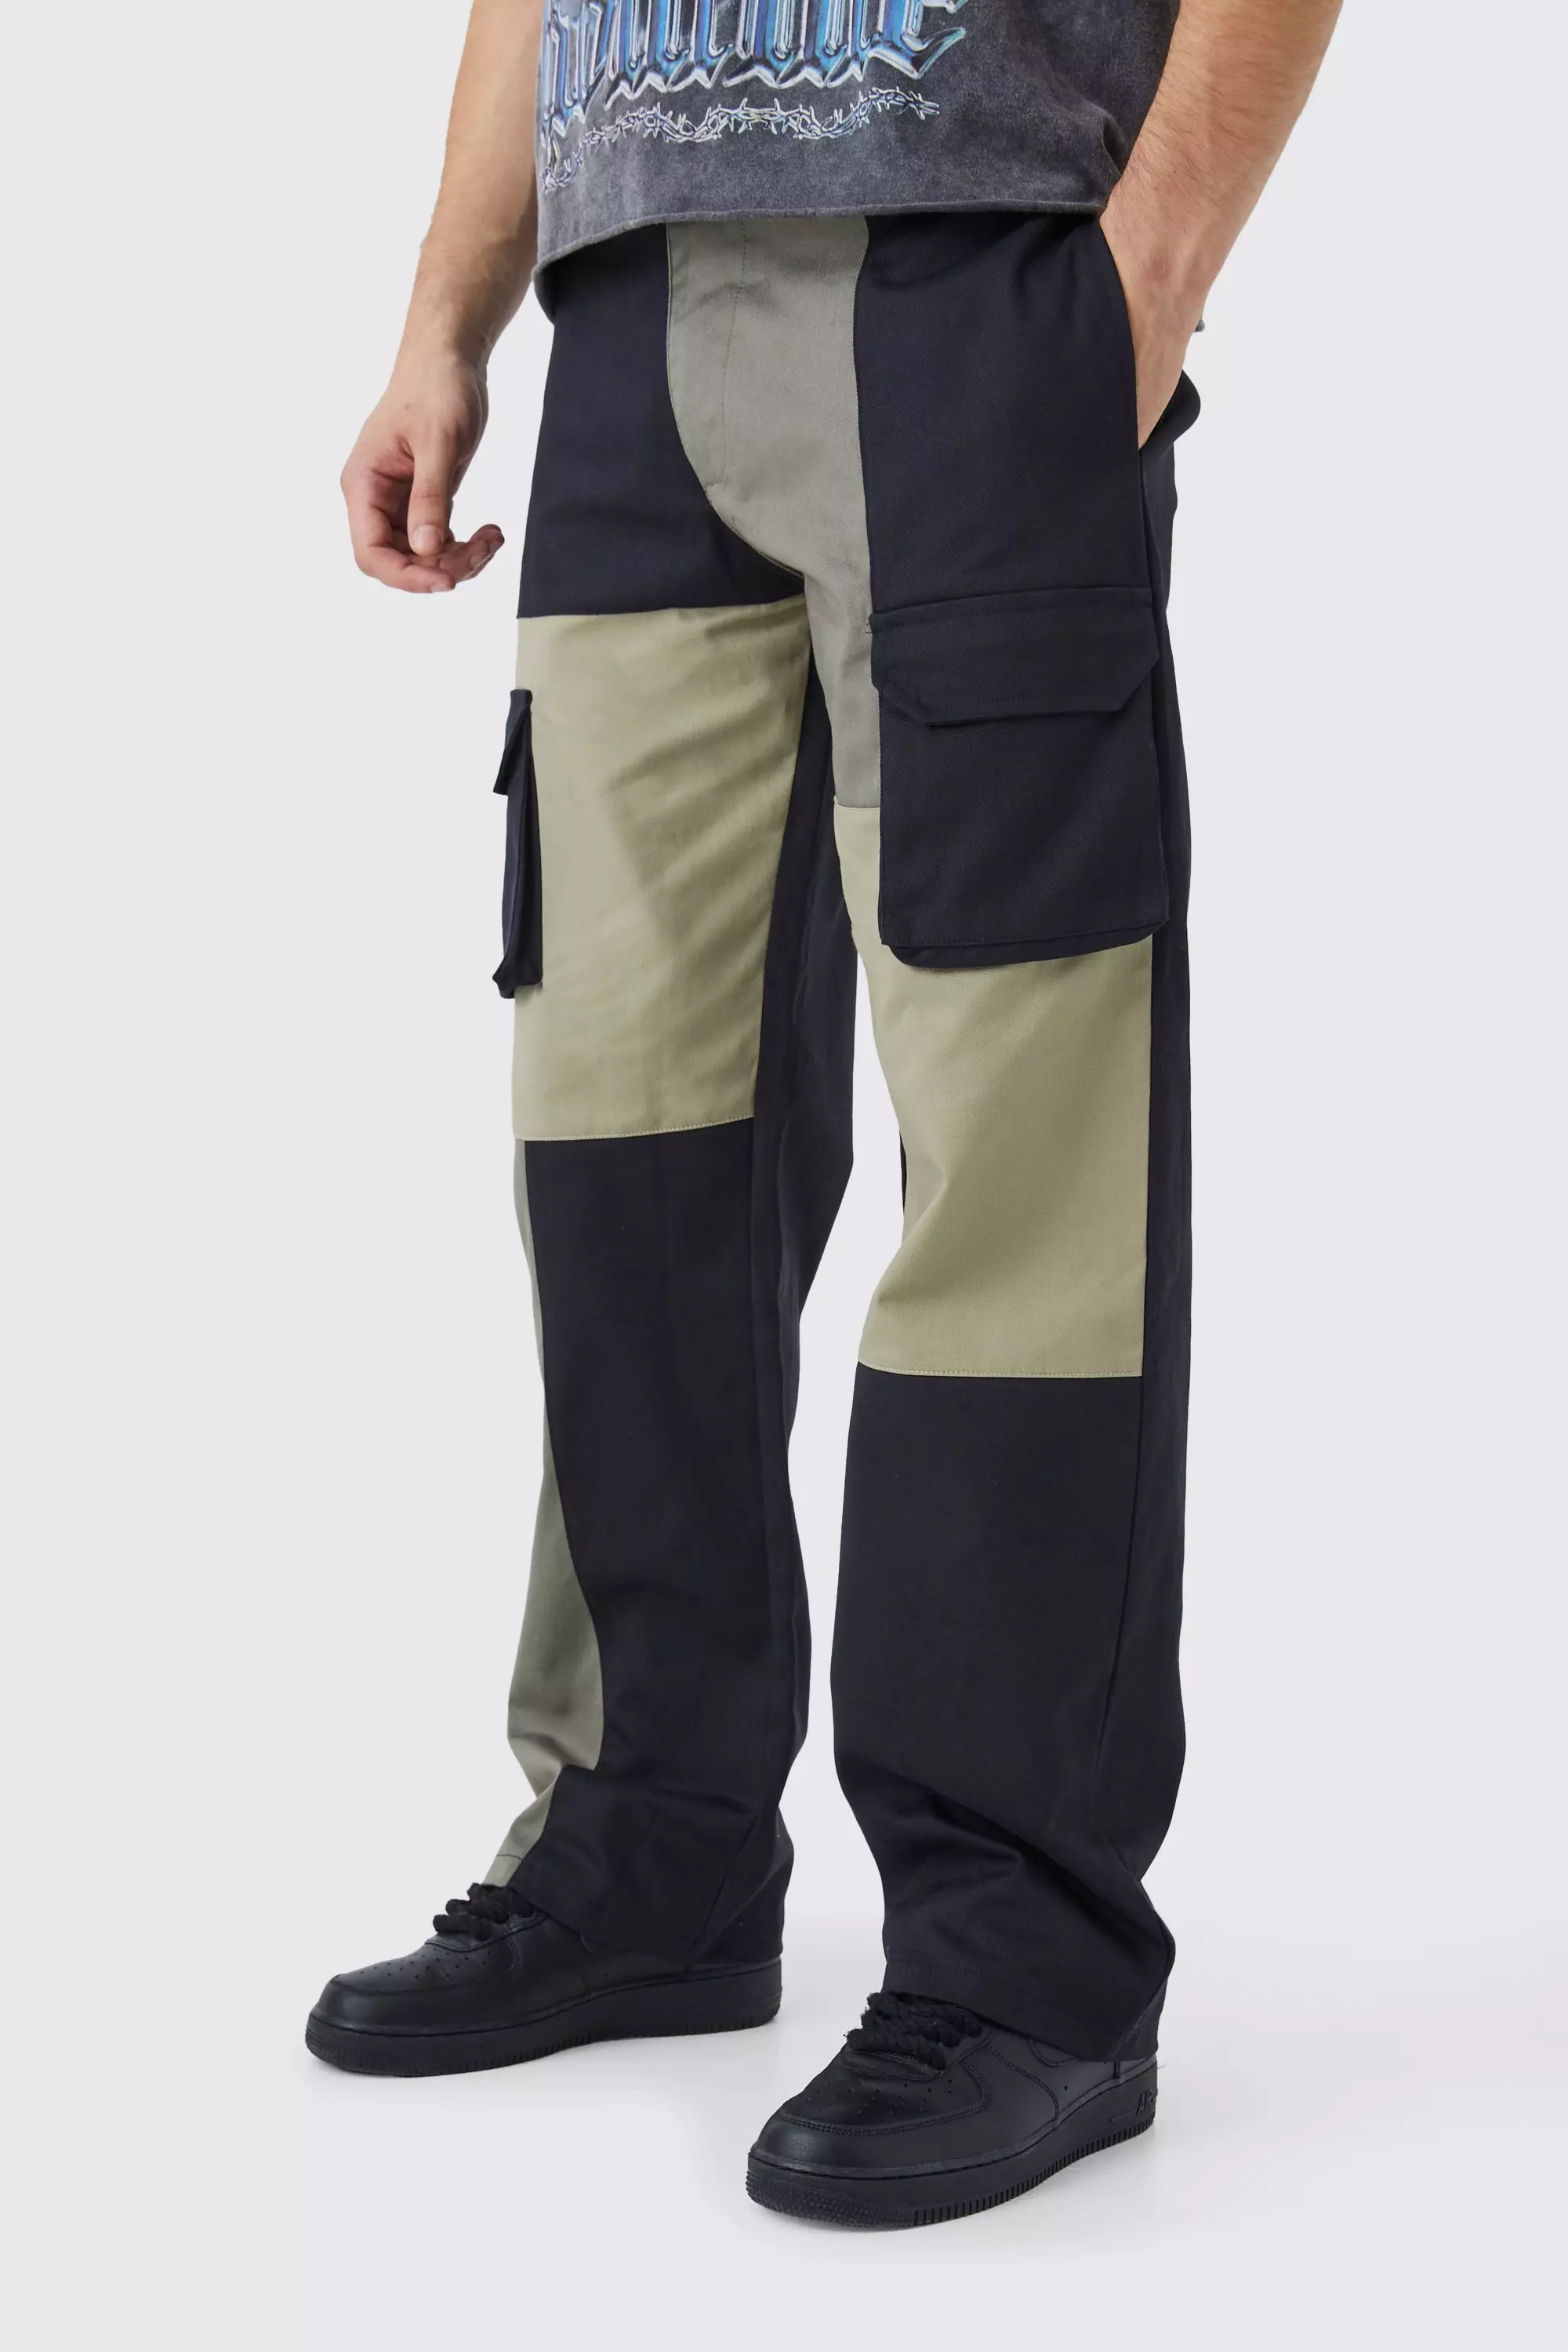 Khaki Tall Relaxed Fit Multi Colour Block Cargo Pants